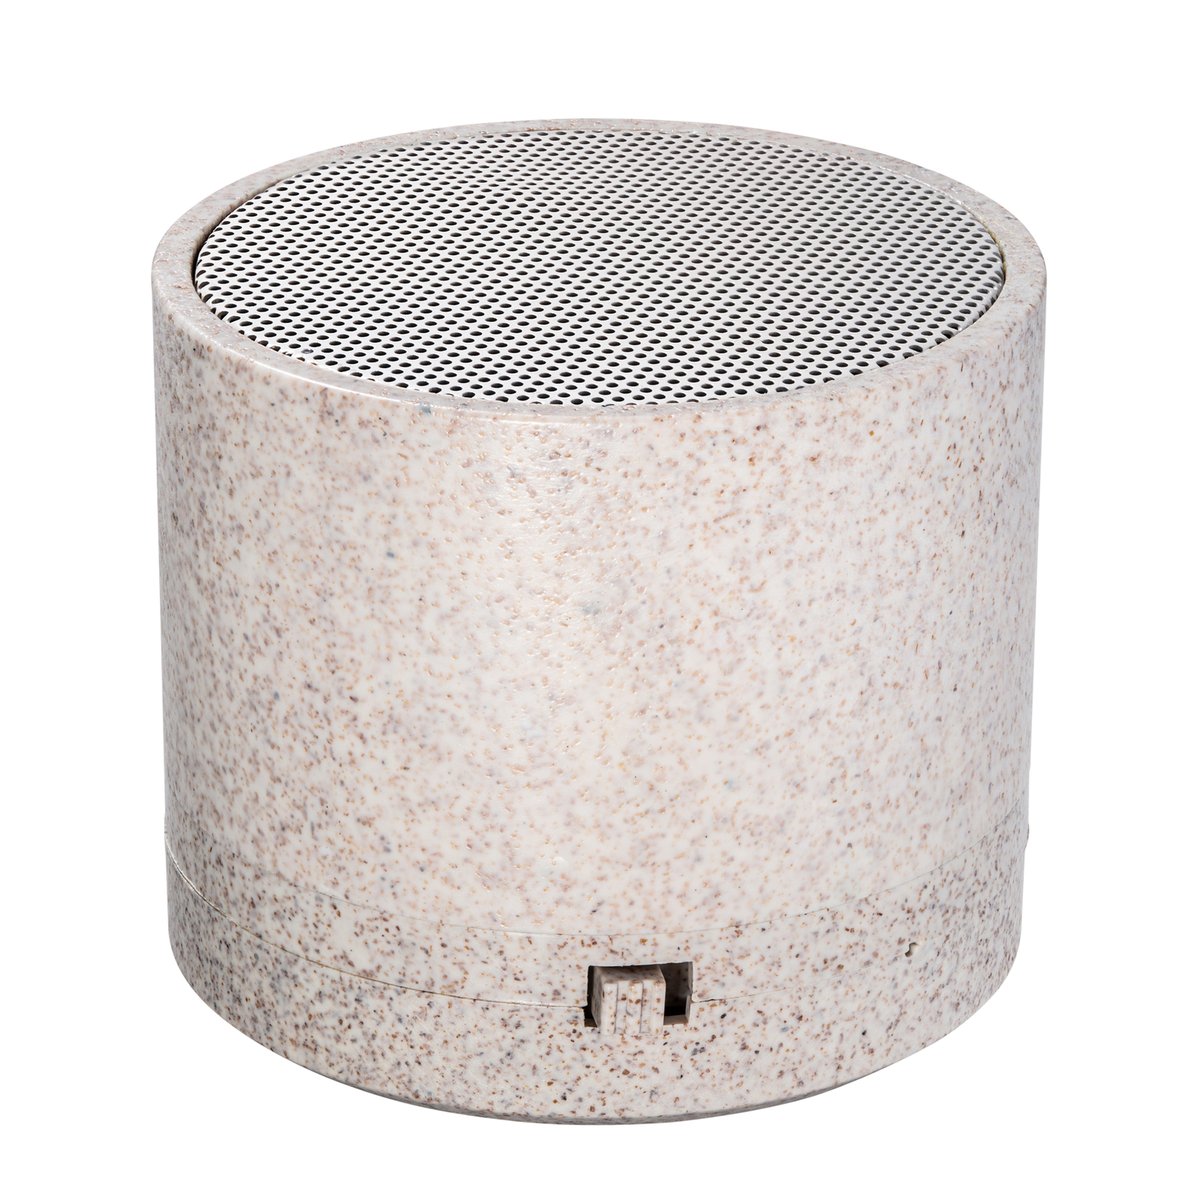 Wireless Speaker REEVES-AMARILLO light brown